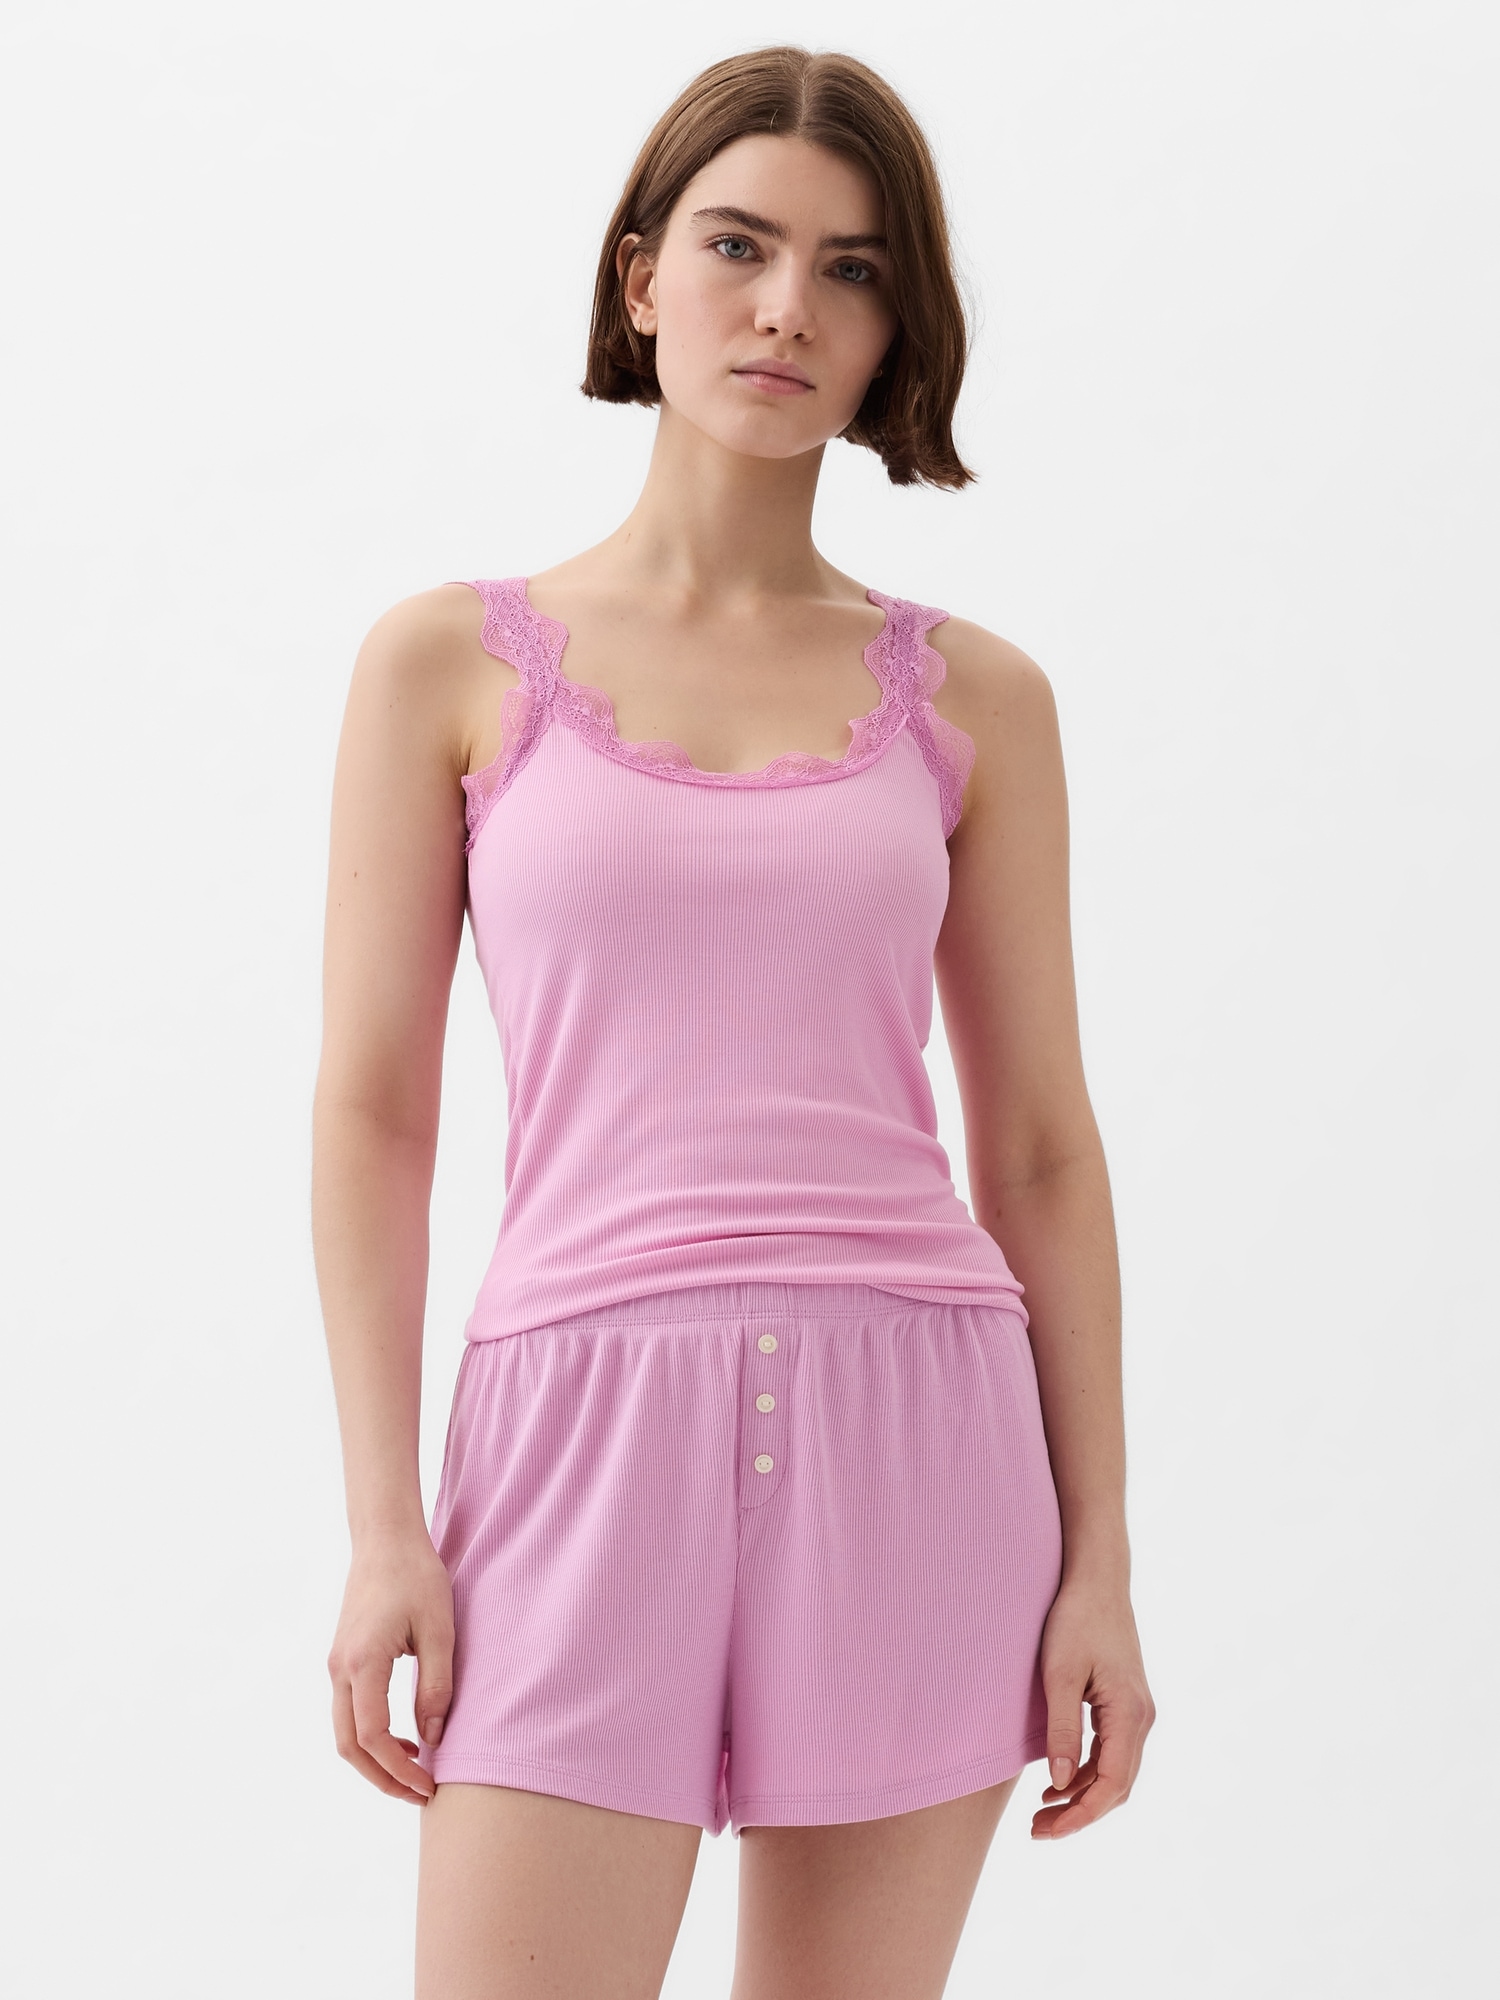 Lace-trimmed Pajama Bodysuit - Light pink - Ladies